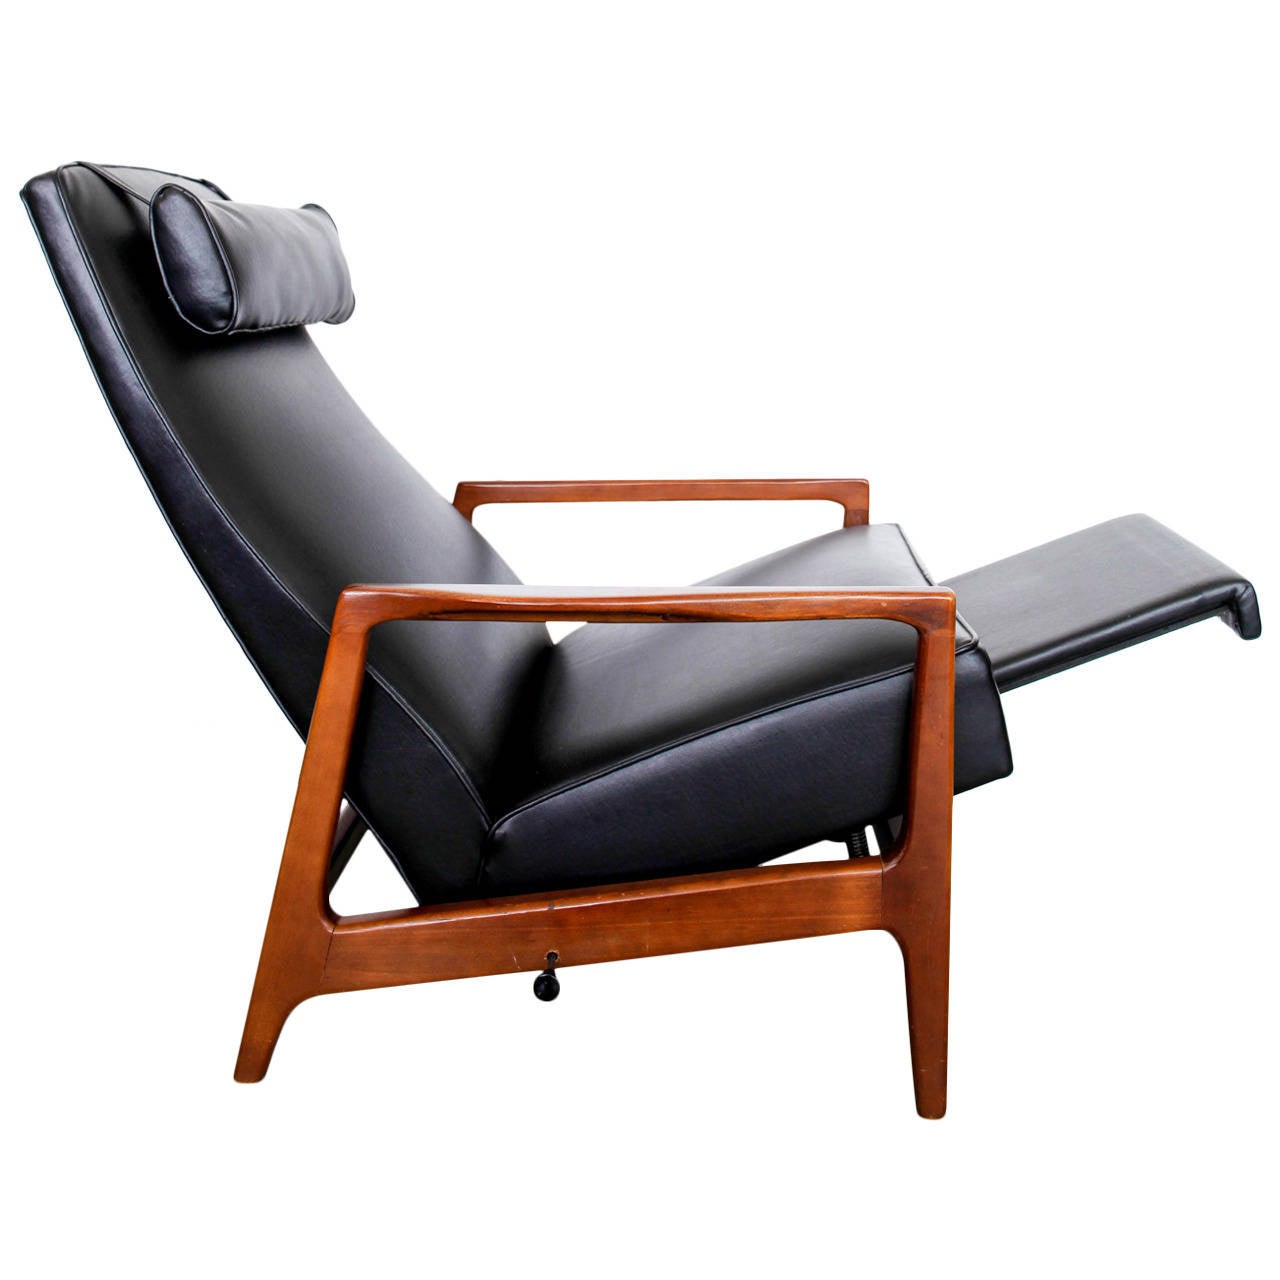 Stunning Leather Black Mid-Century Reclining Danish Lounge Chair at 1stdibs